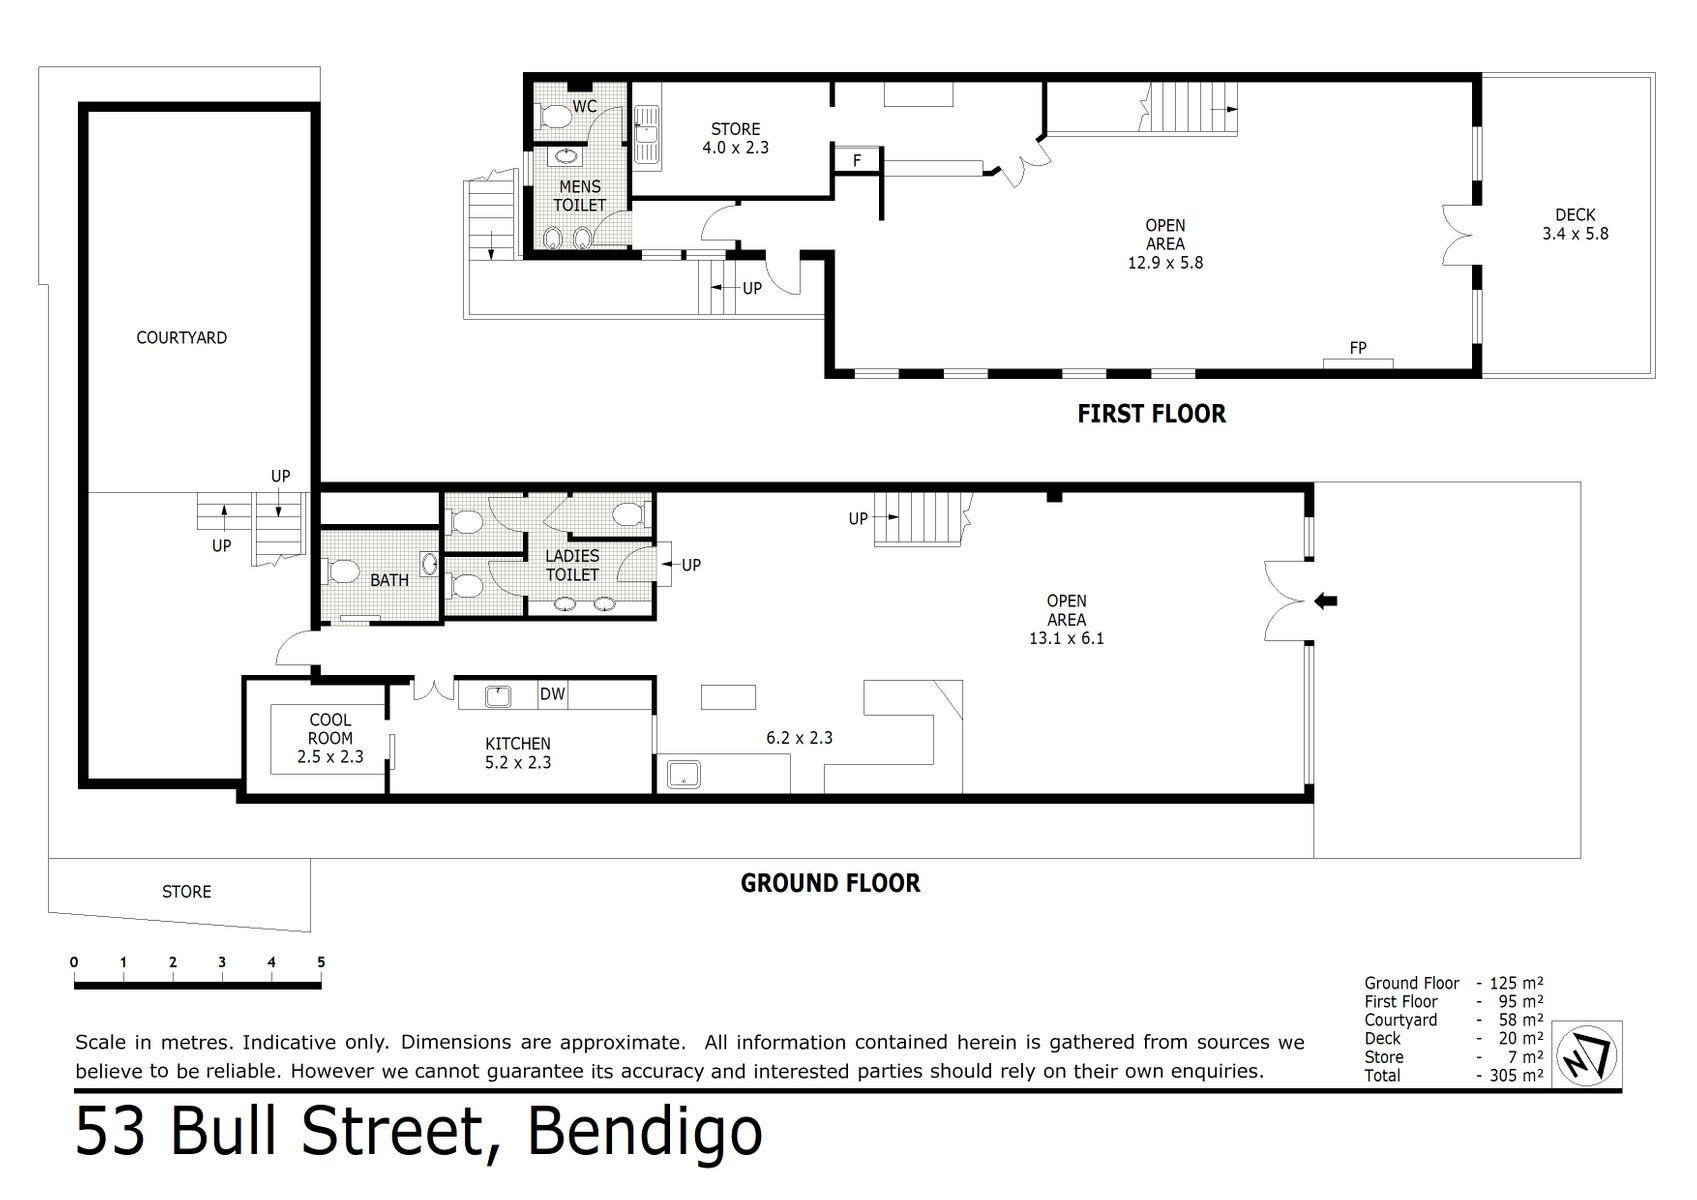 53 Bull Street Bendigo (21 OCT 2020) 220sqm